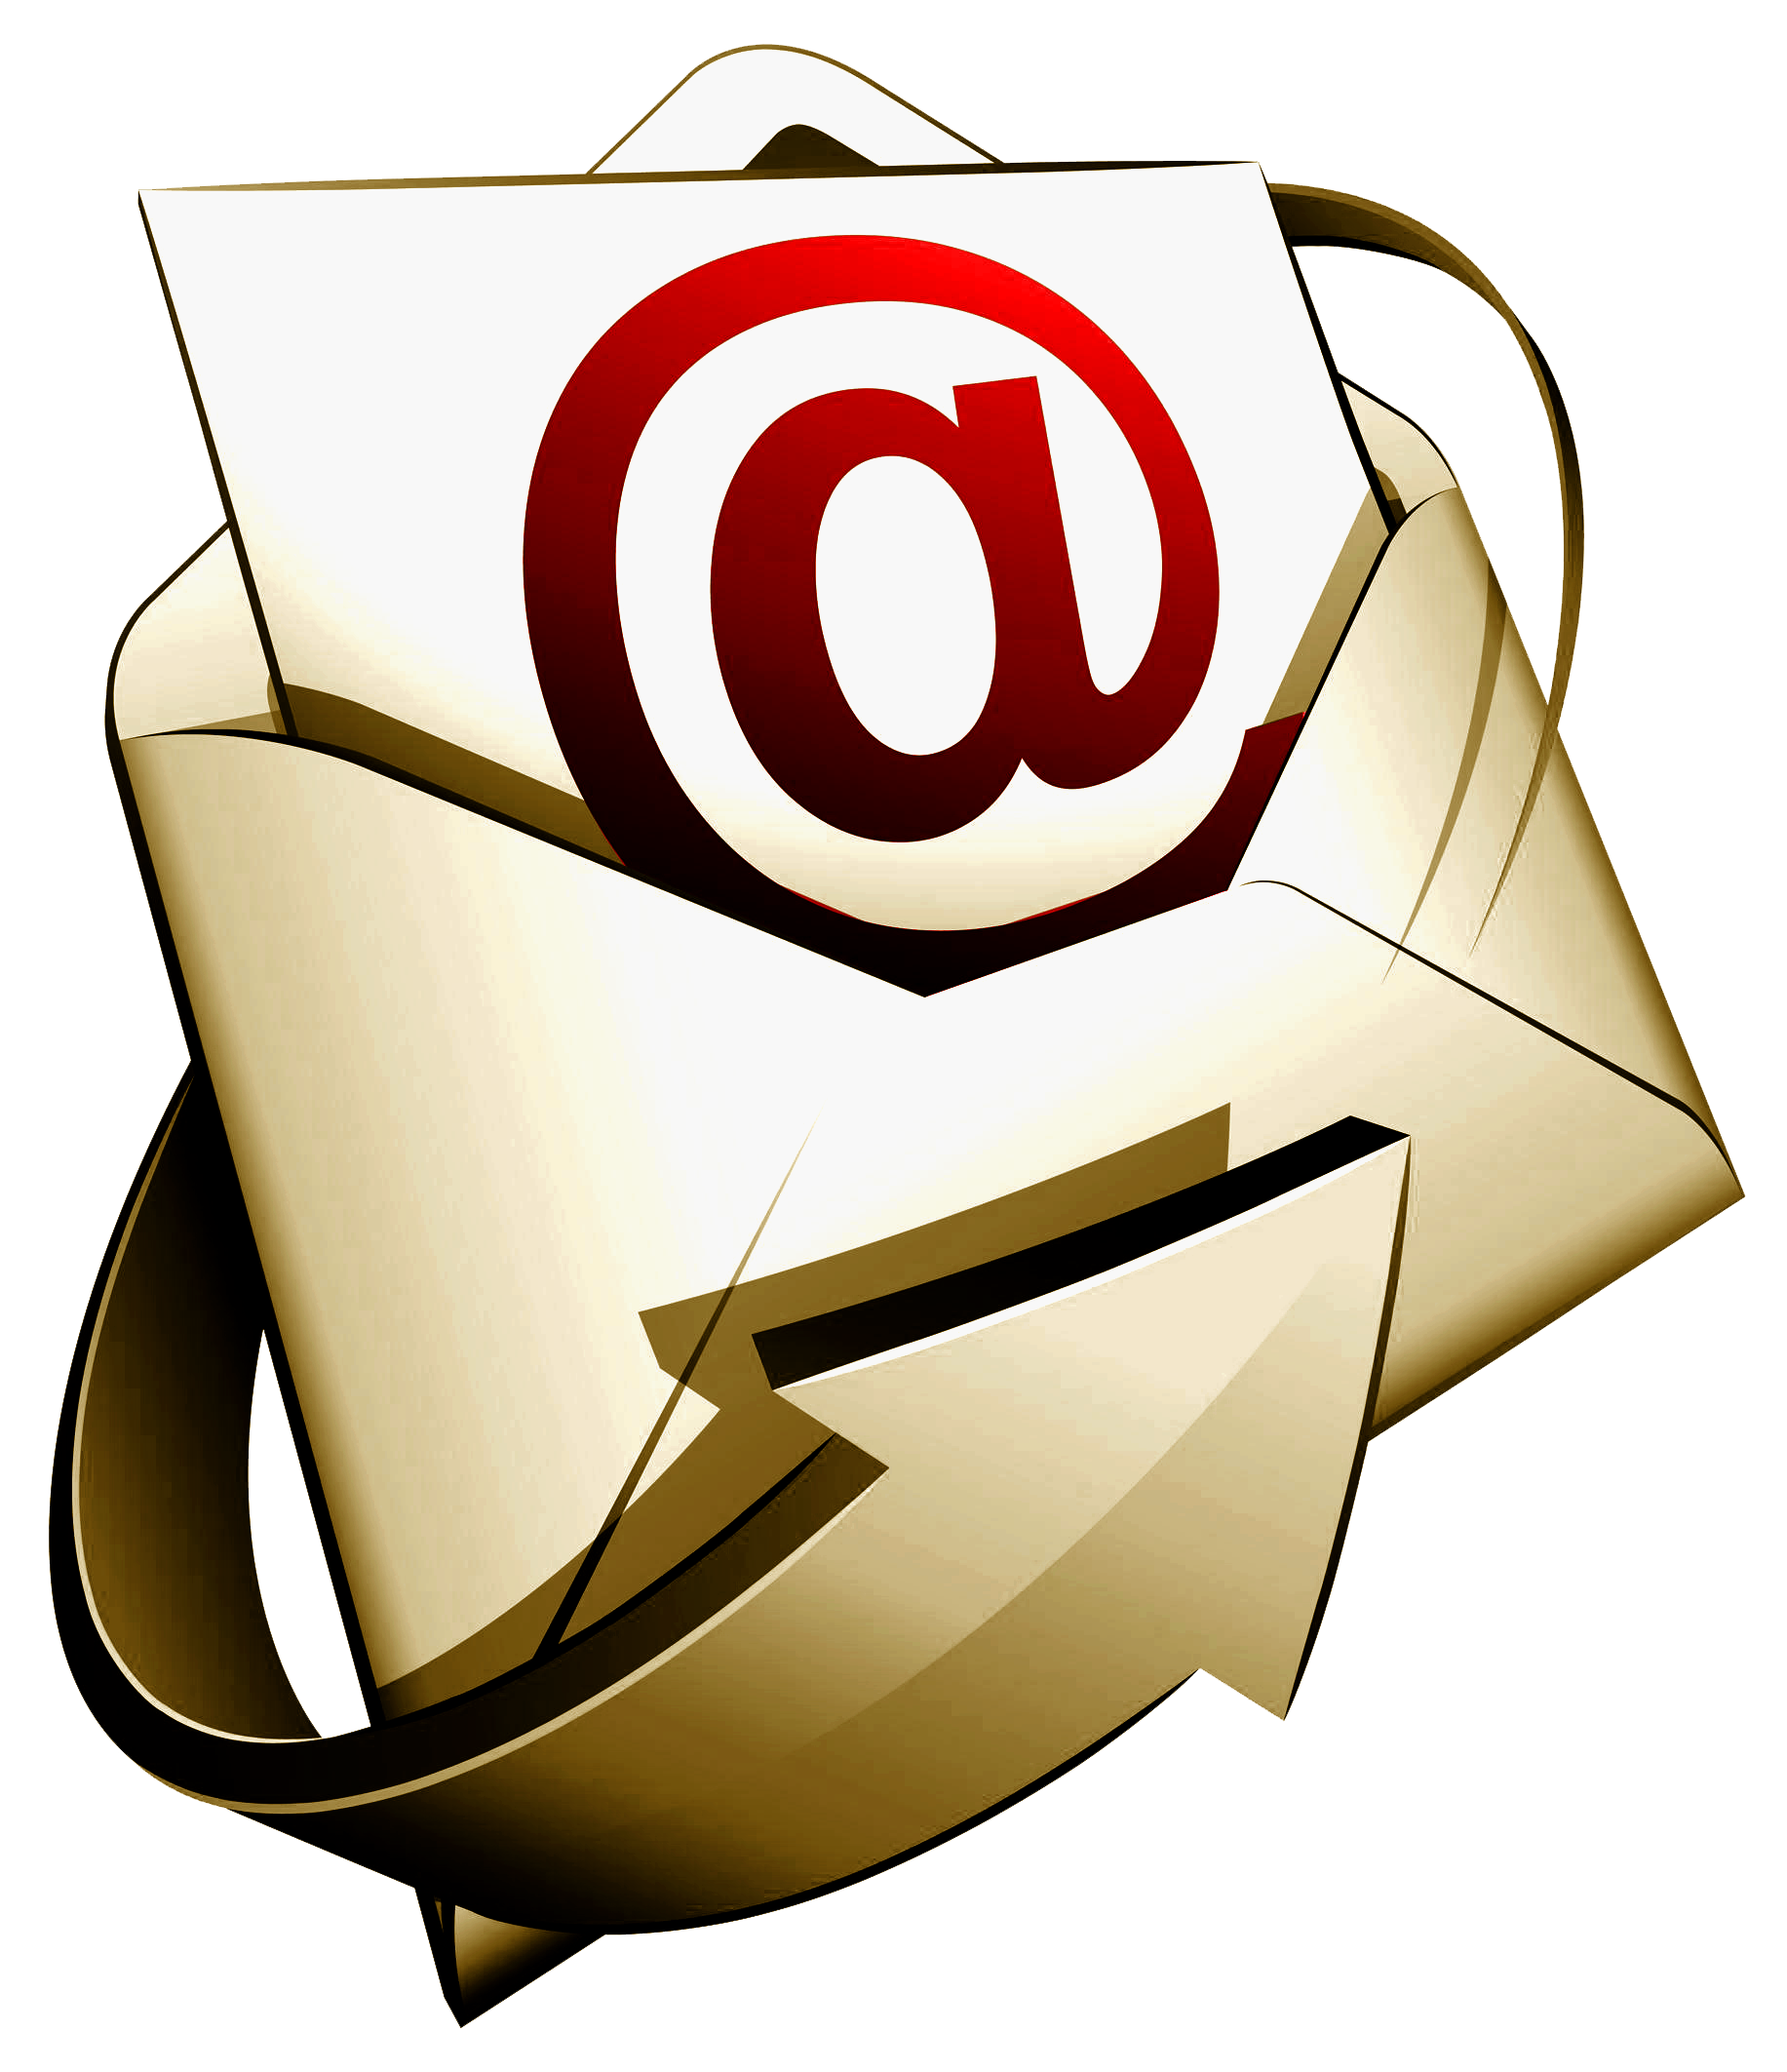 Picture mail. Электронная почта. Elektroni pochta. Пот электронная. Логотип электронной почты.